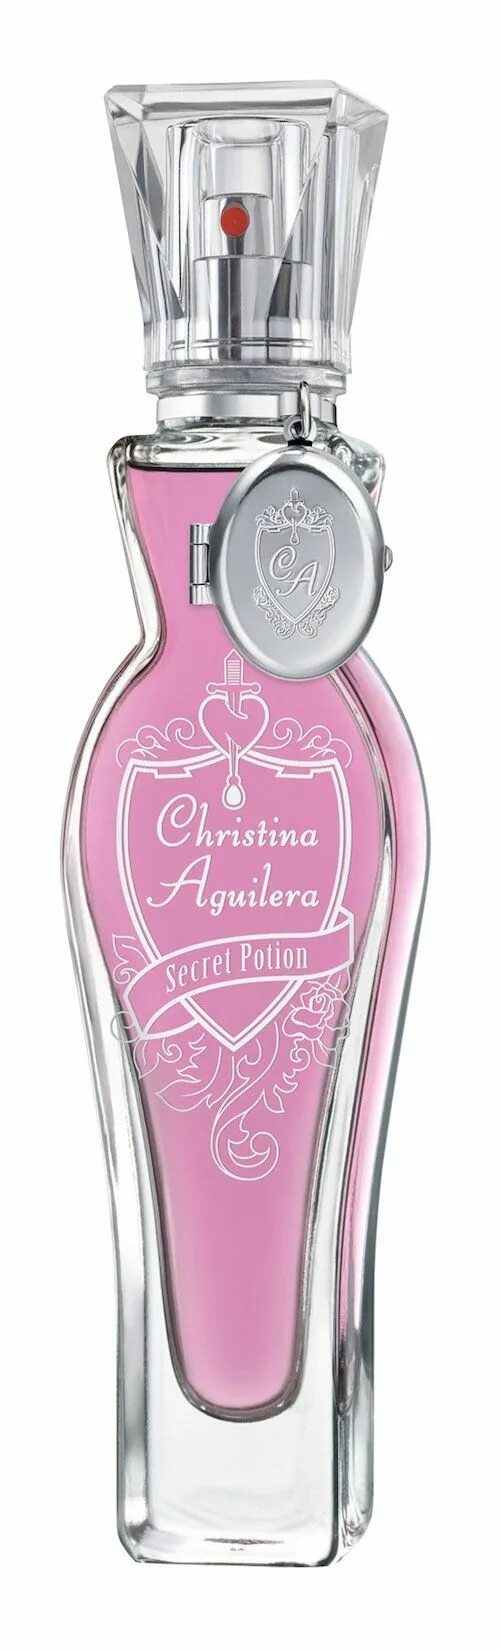 Secret potion. Духи Christina Aguilera Secret Potion. Christina Aguilera Secret Potion 30.